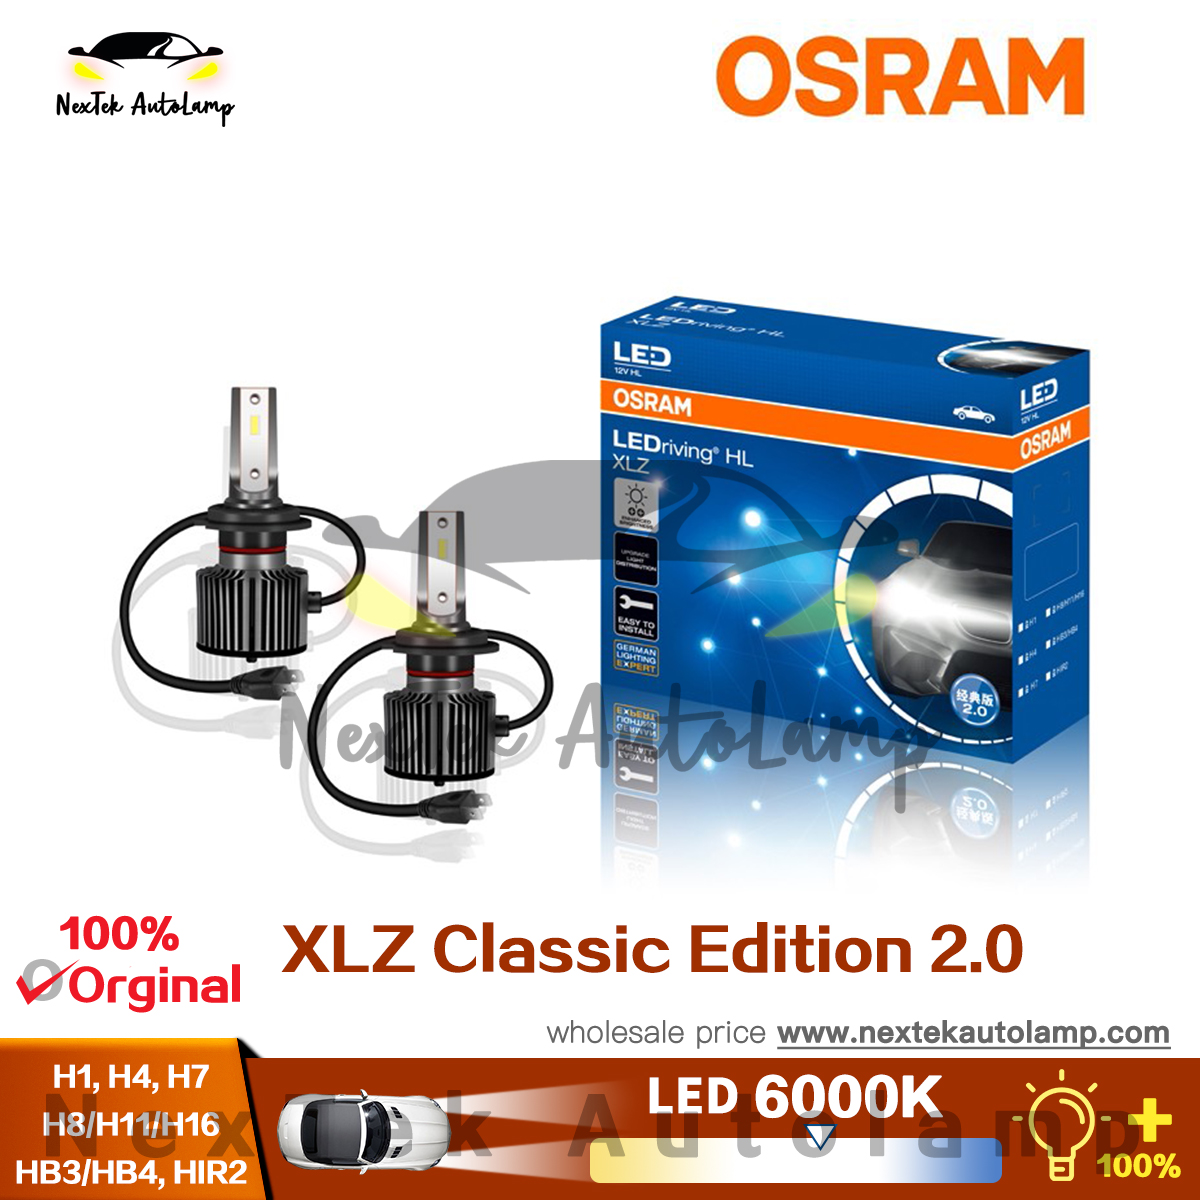 OSRAM XLZ Classic 2.0 LED H1 H4 H7 H8 H11 H16 HB3 HB4 HIR2 6000K Car Auto  Headlight Quick Start Germany LEDrving